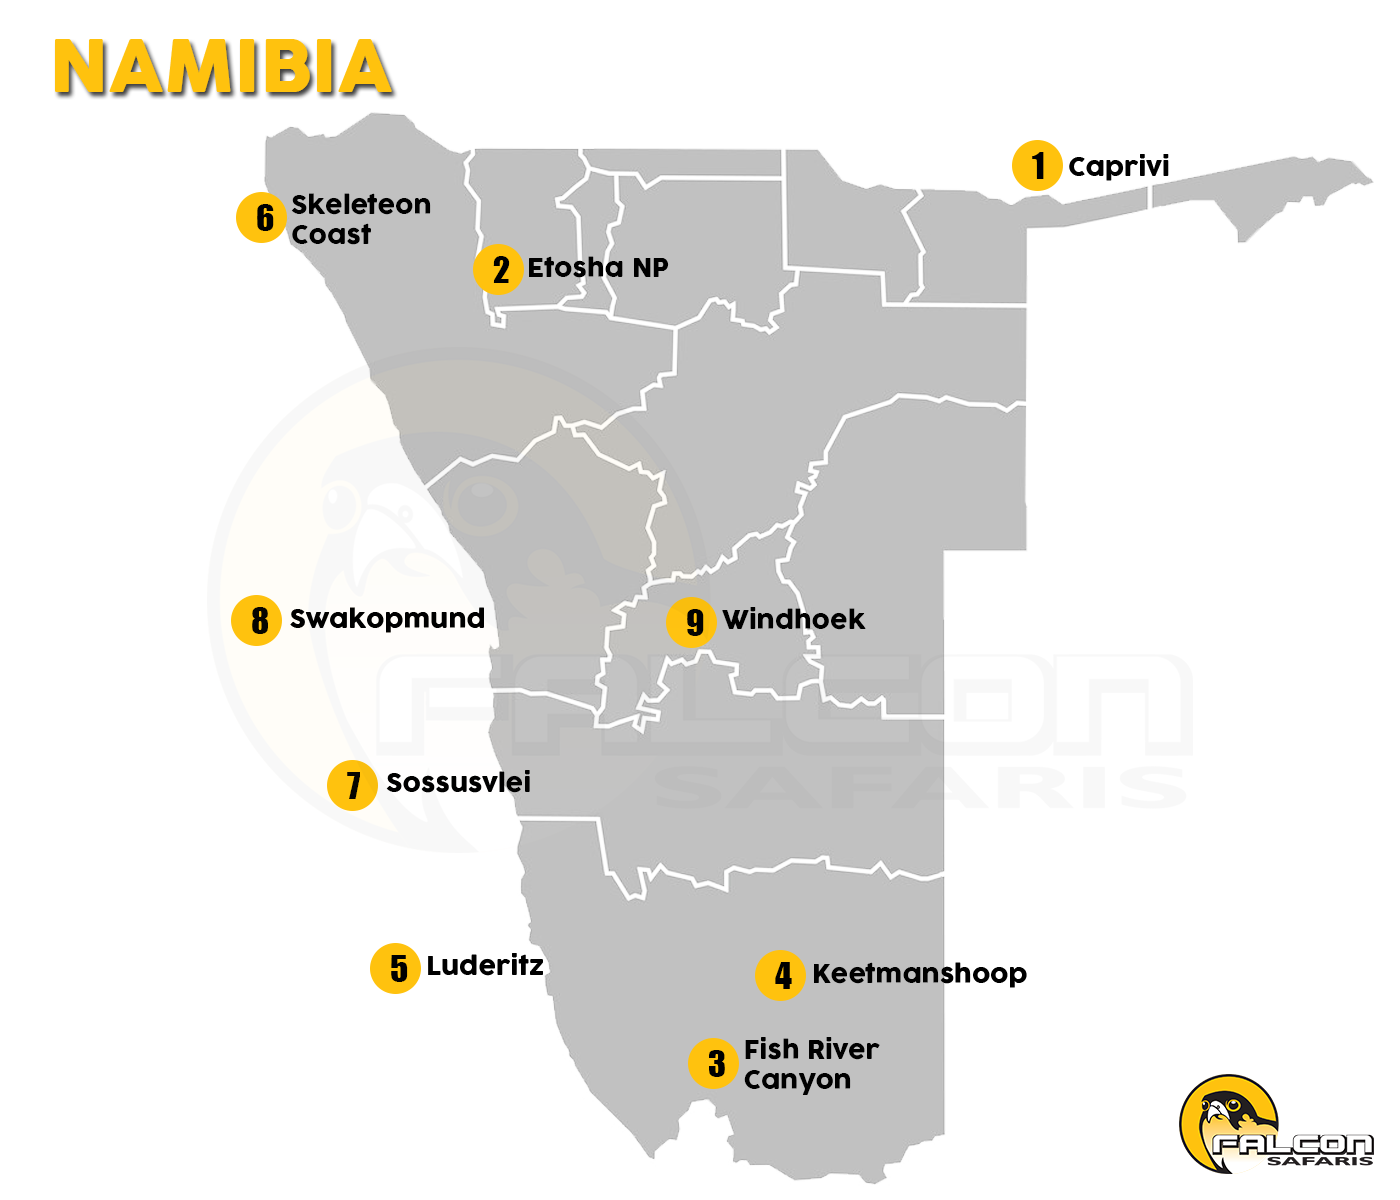 Namibia Destinations Map